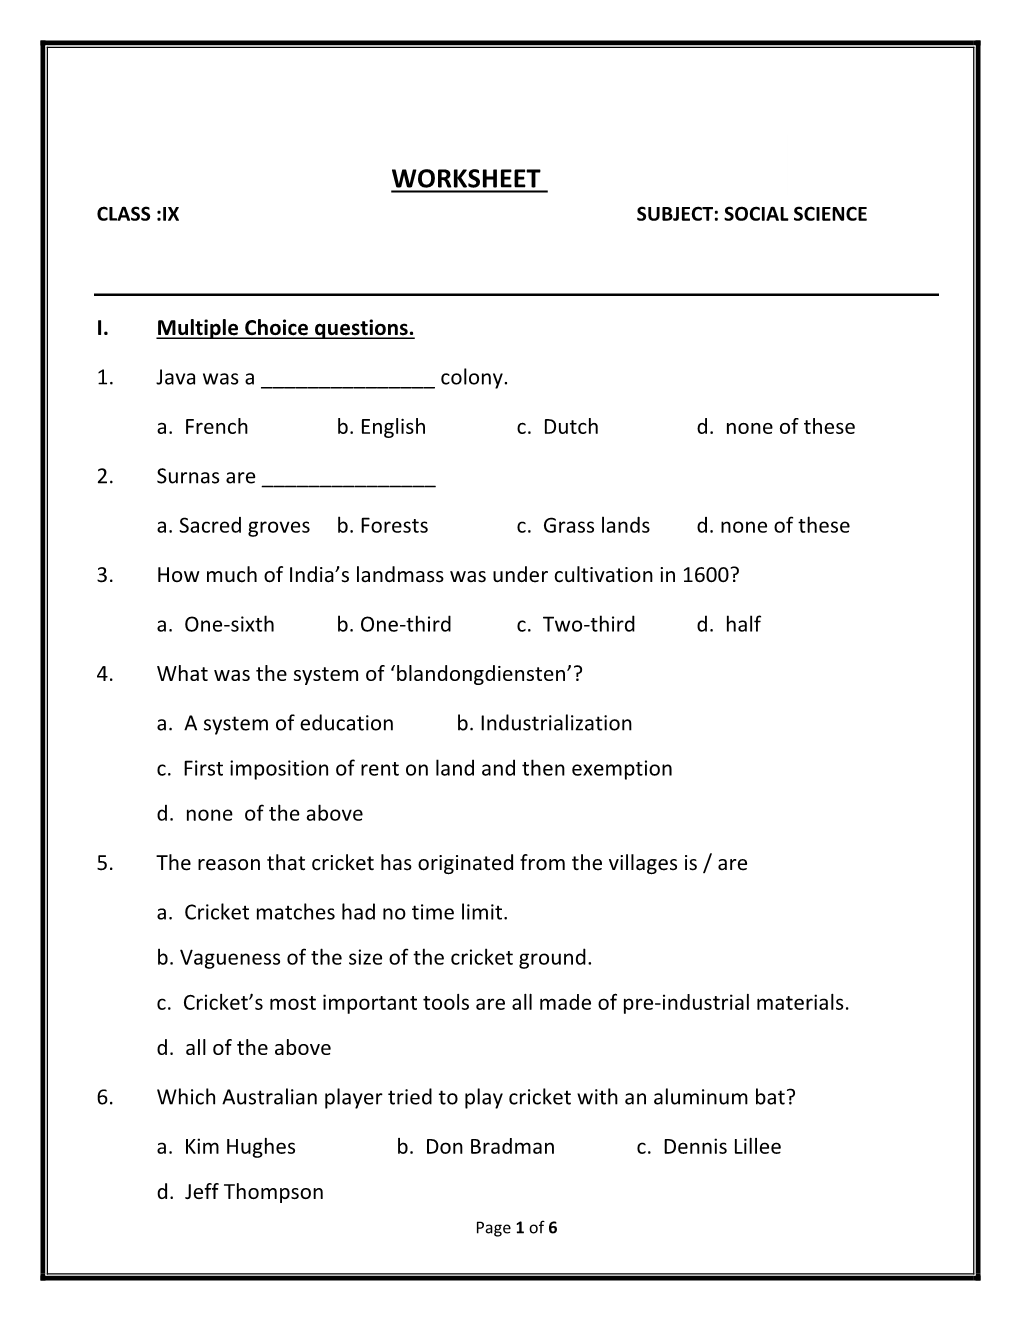 Worksheet 2012-13 Class :Ix Subject: Social Science